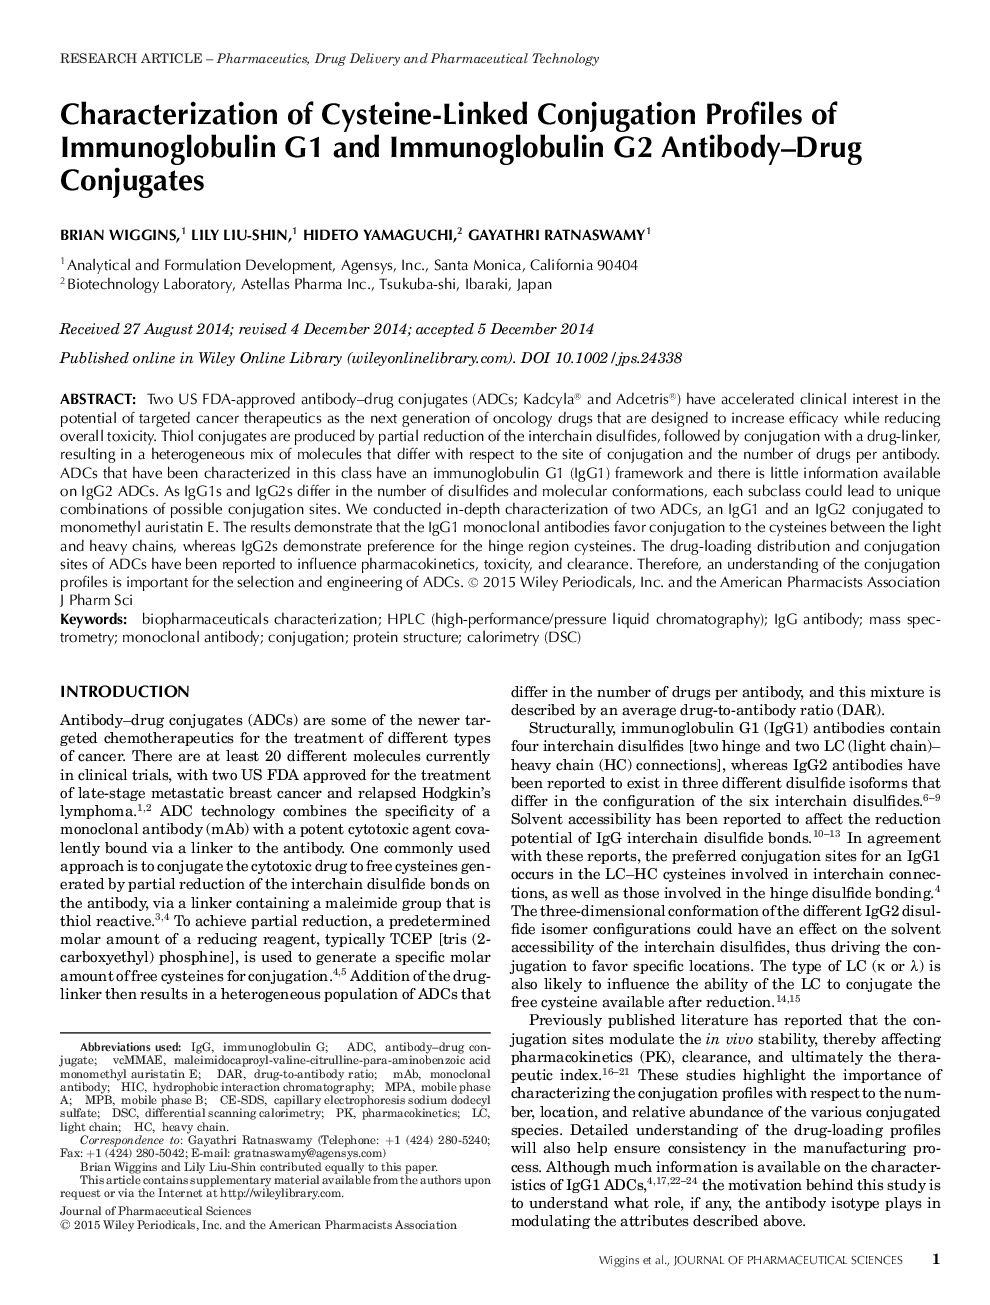 Characterization of Cysteine-Linked Conjugation Profiles of Immunoglobulin G1 and Immunoglobulin G2 Antibody-Drug Conjugates